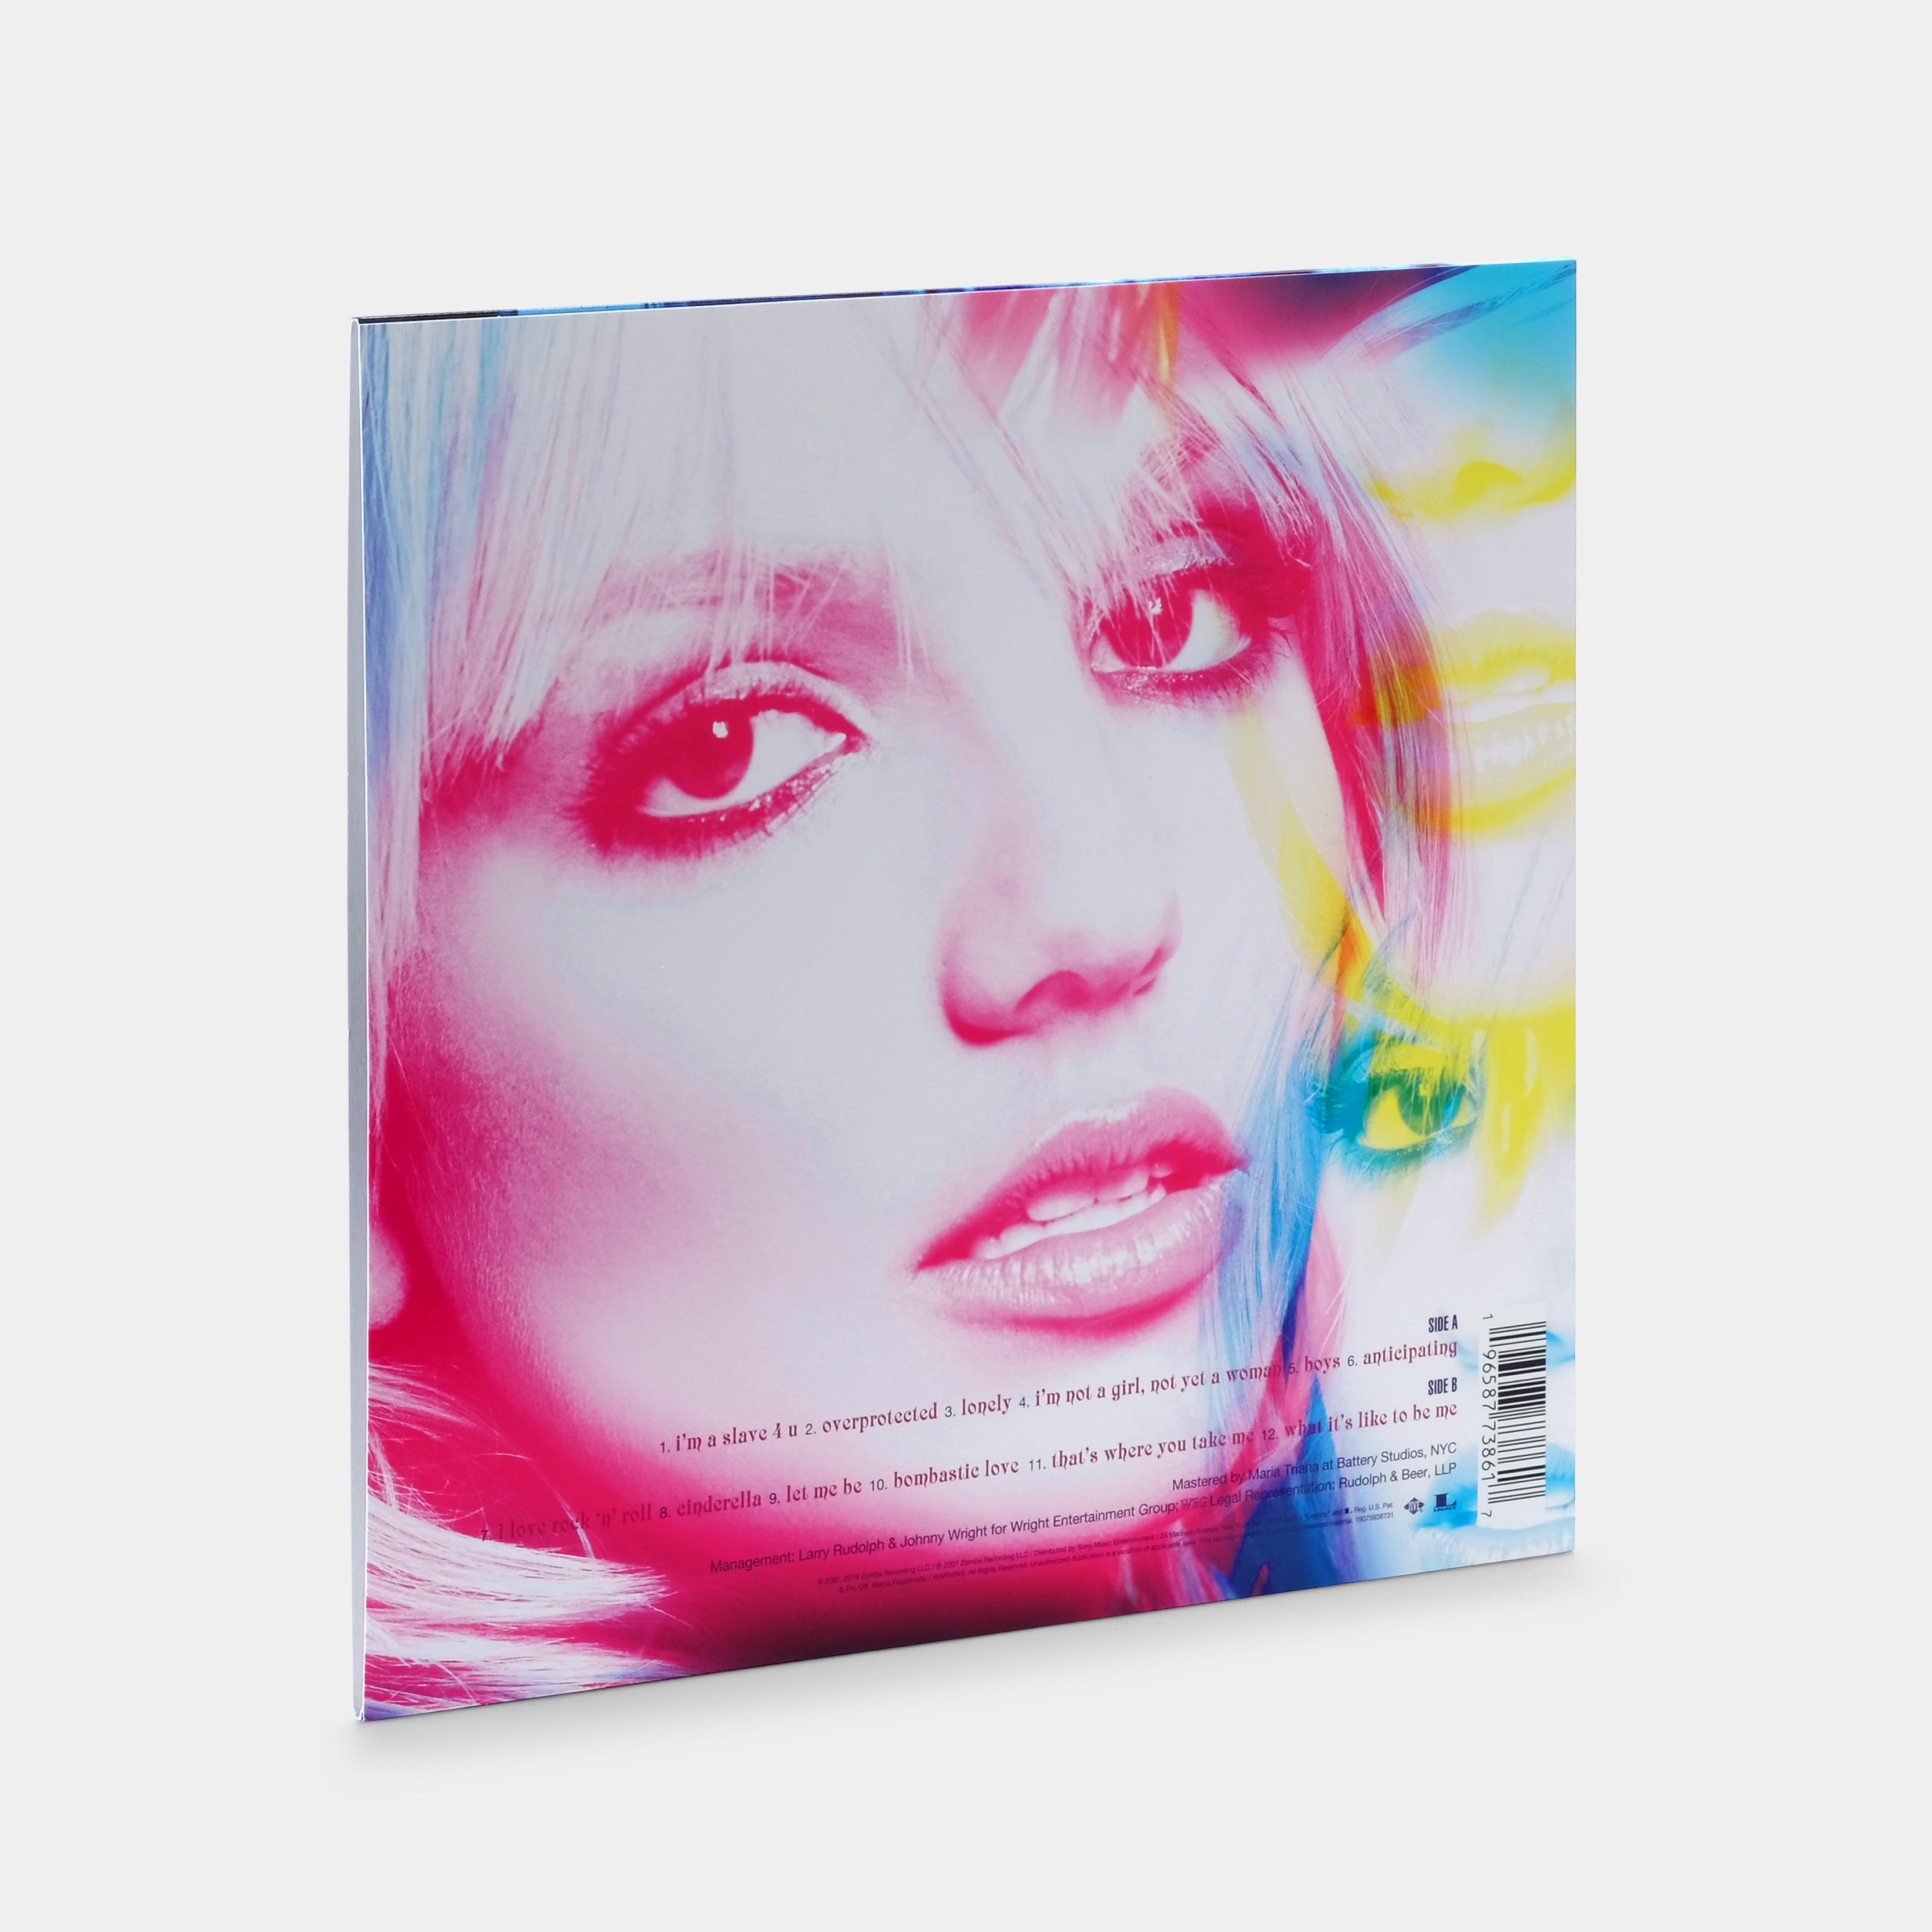 Britney Spears - Britney LP Vinyl Record